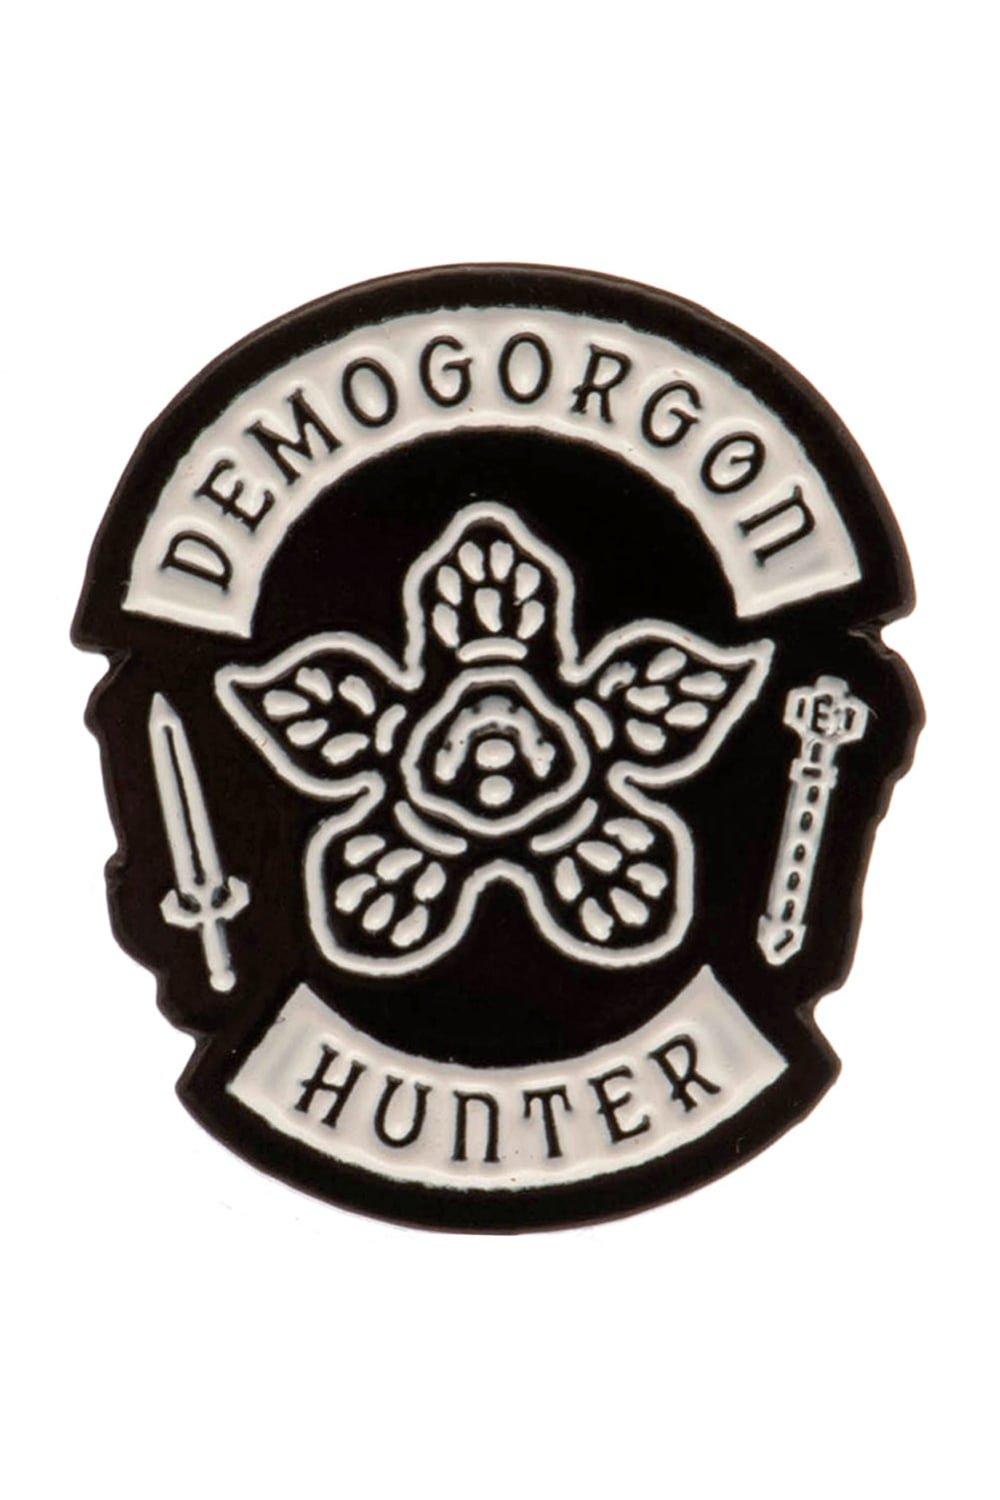 Demogorgon Hunter Badge